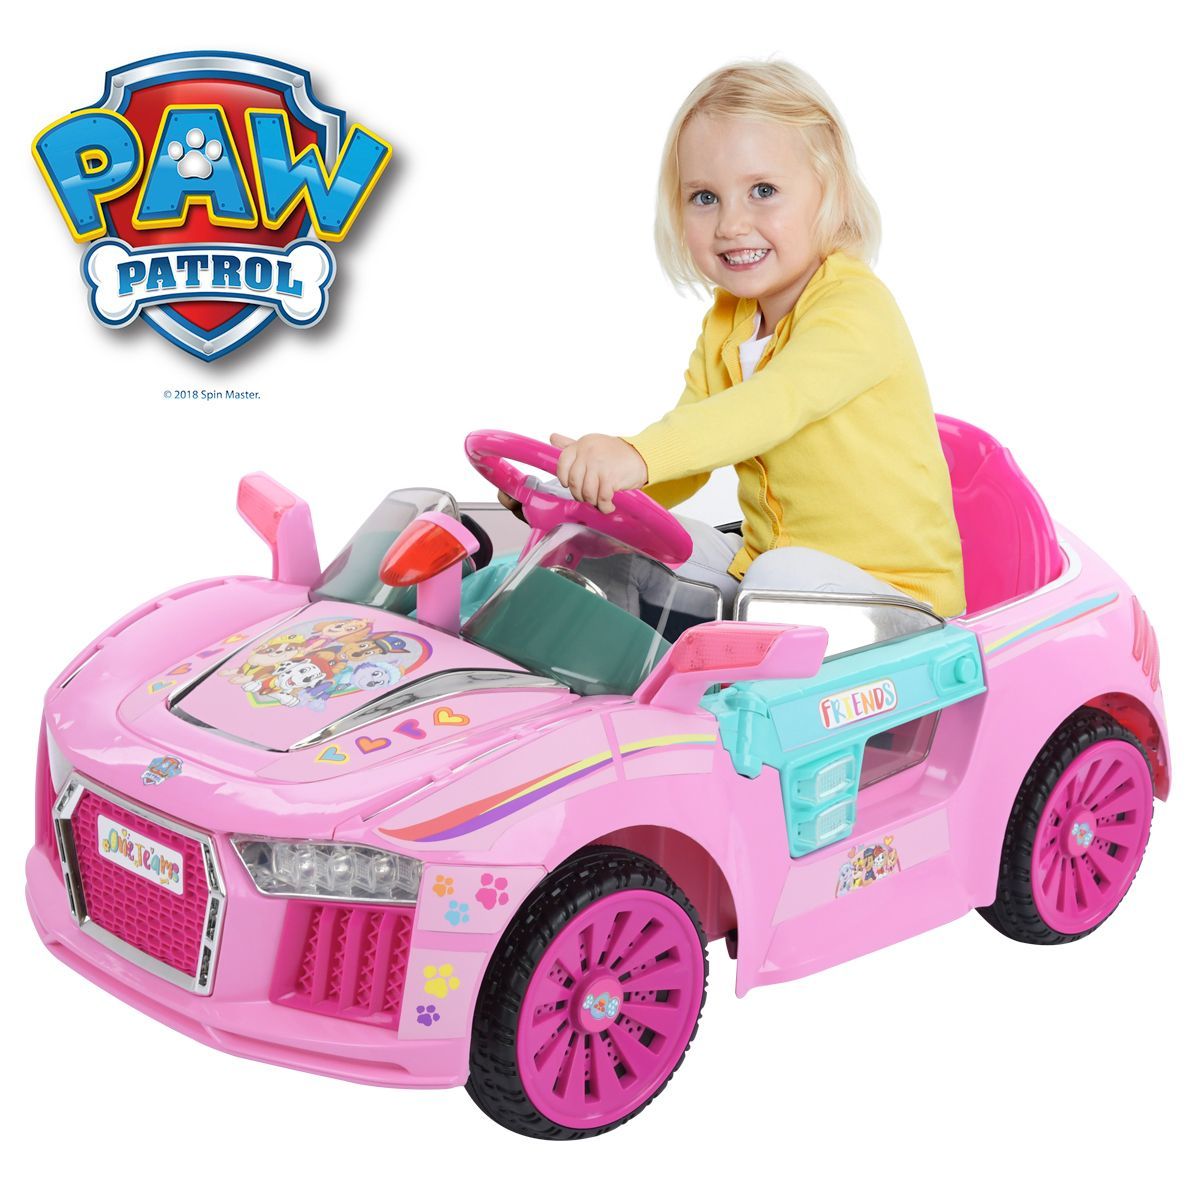 Paw Patrol E-Cruiser Ride-On Car, Pink |